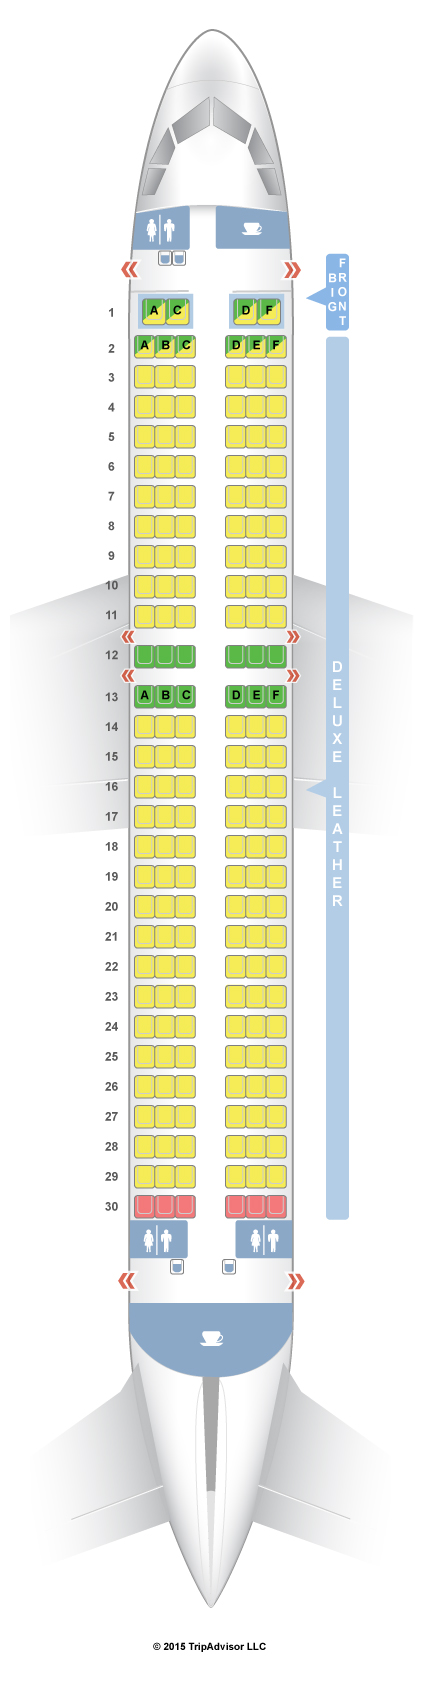 Spirit Flight Seating Chart